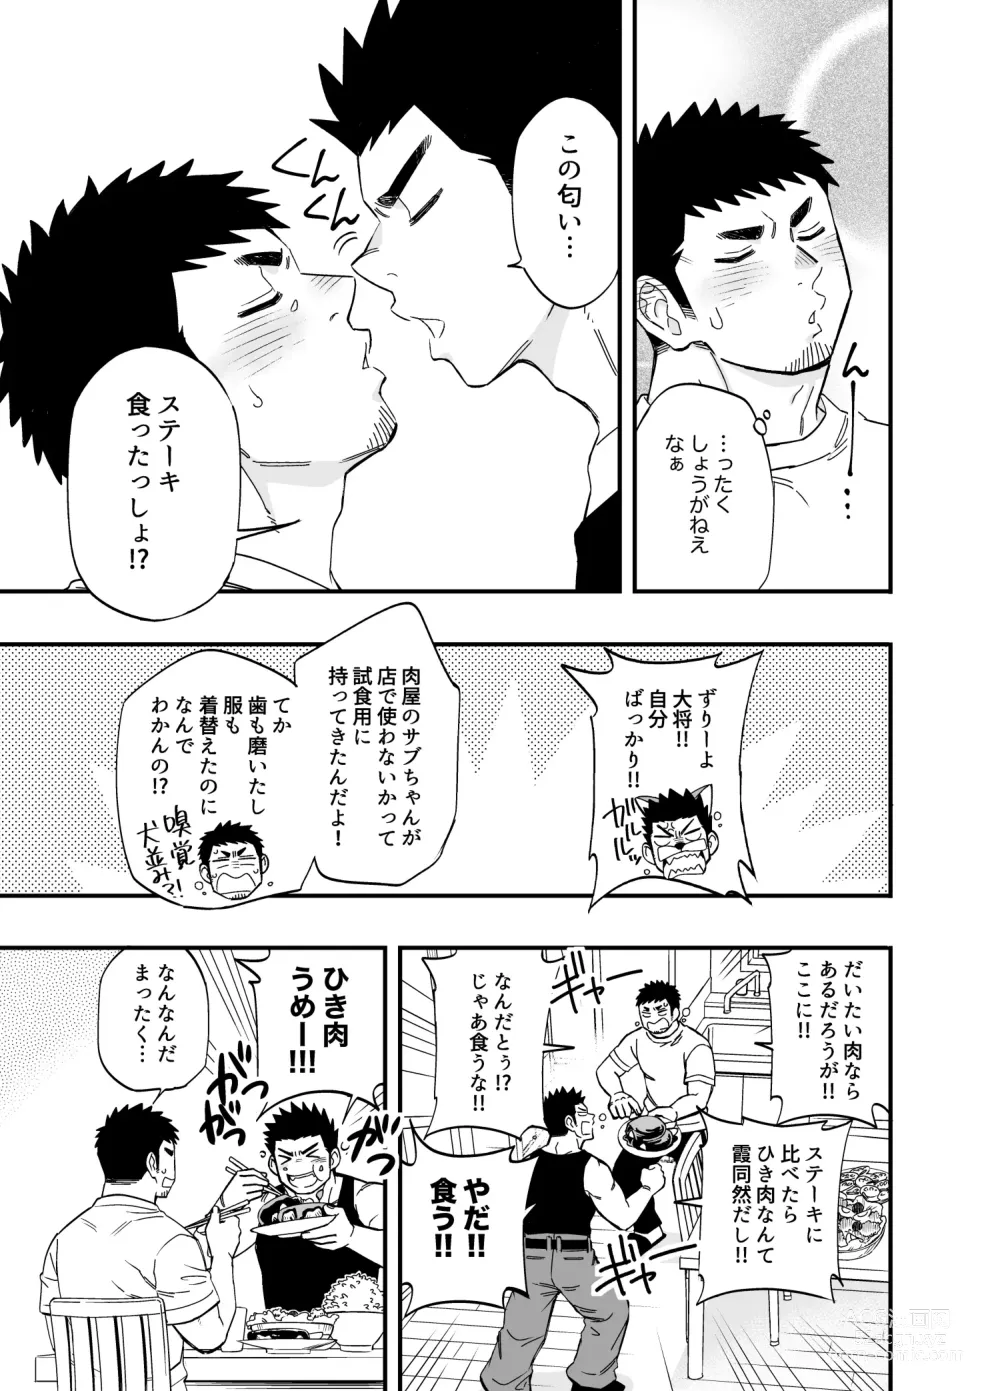 Page 10 of doujinshi Wonderful Life